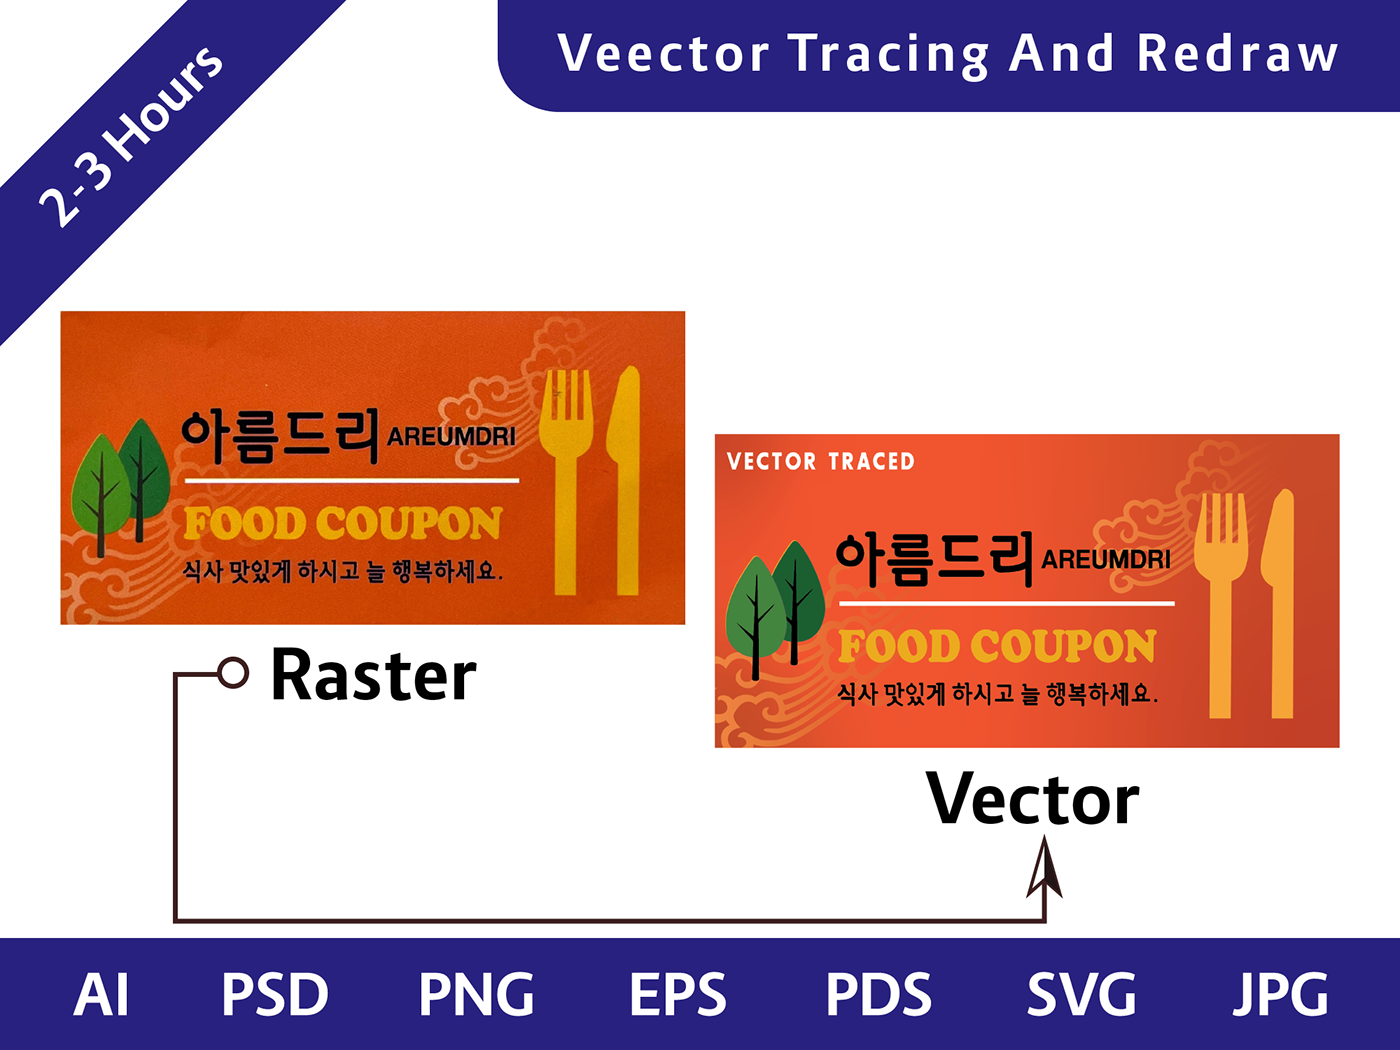 adobe illustrator business card design COUPON coupon design vector vector art Vector Illustration vectorart vectors